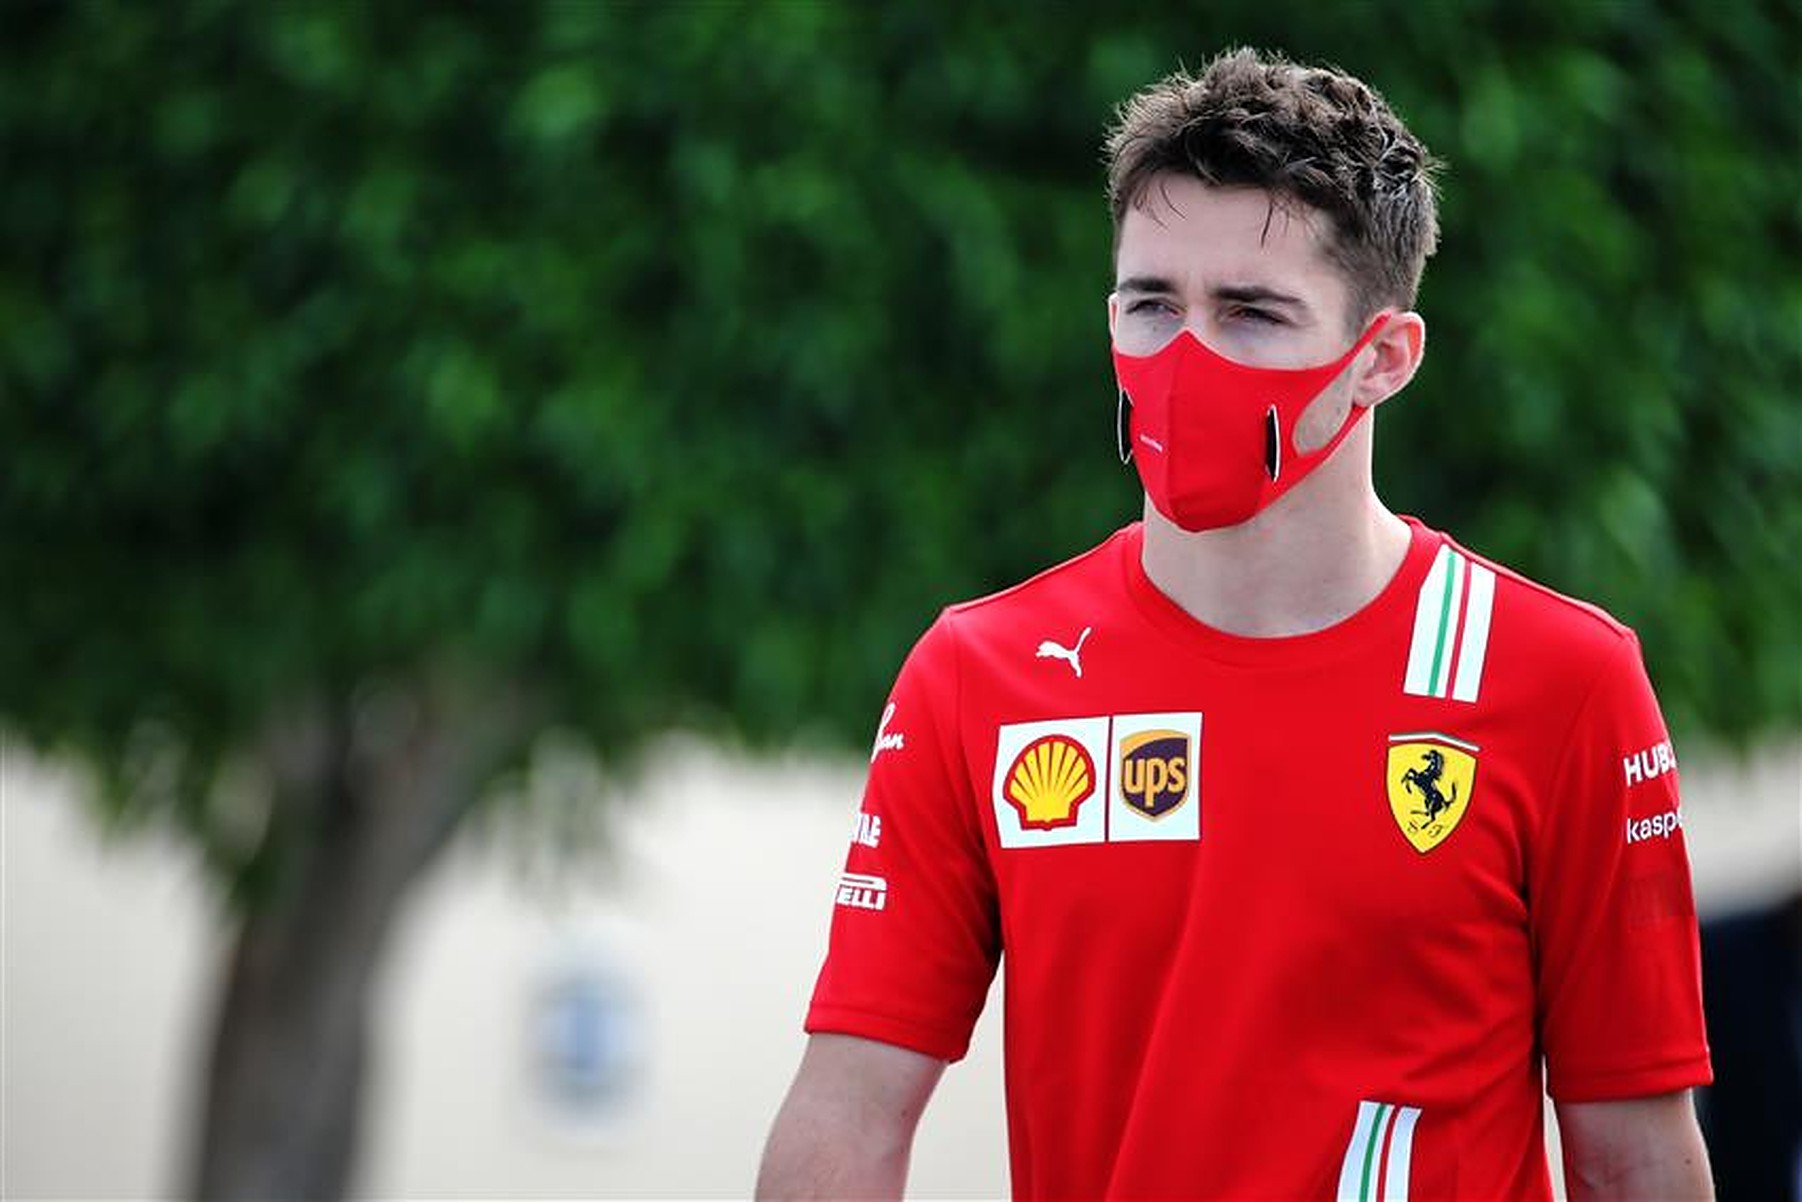 Charles Leclerc Ferrari F1 driver open to Le Mans race - Formula1news.co.uk